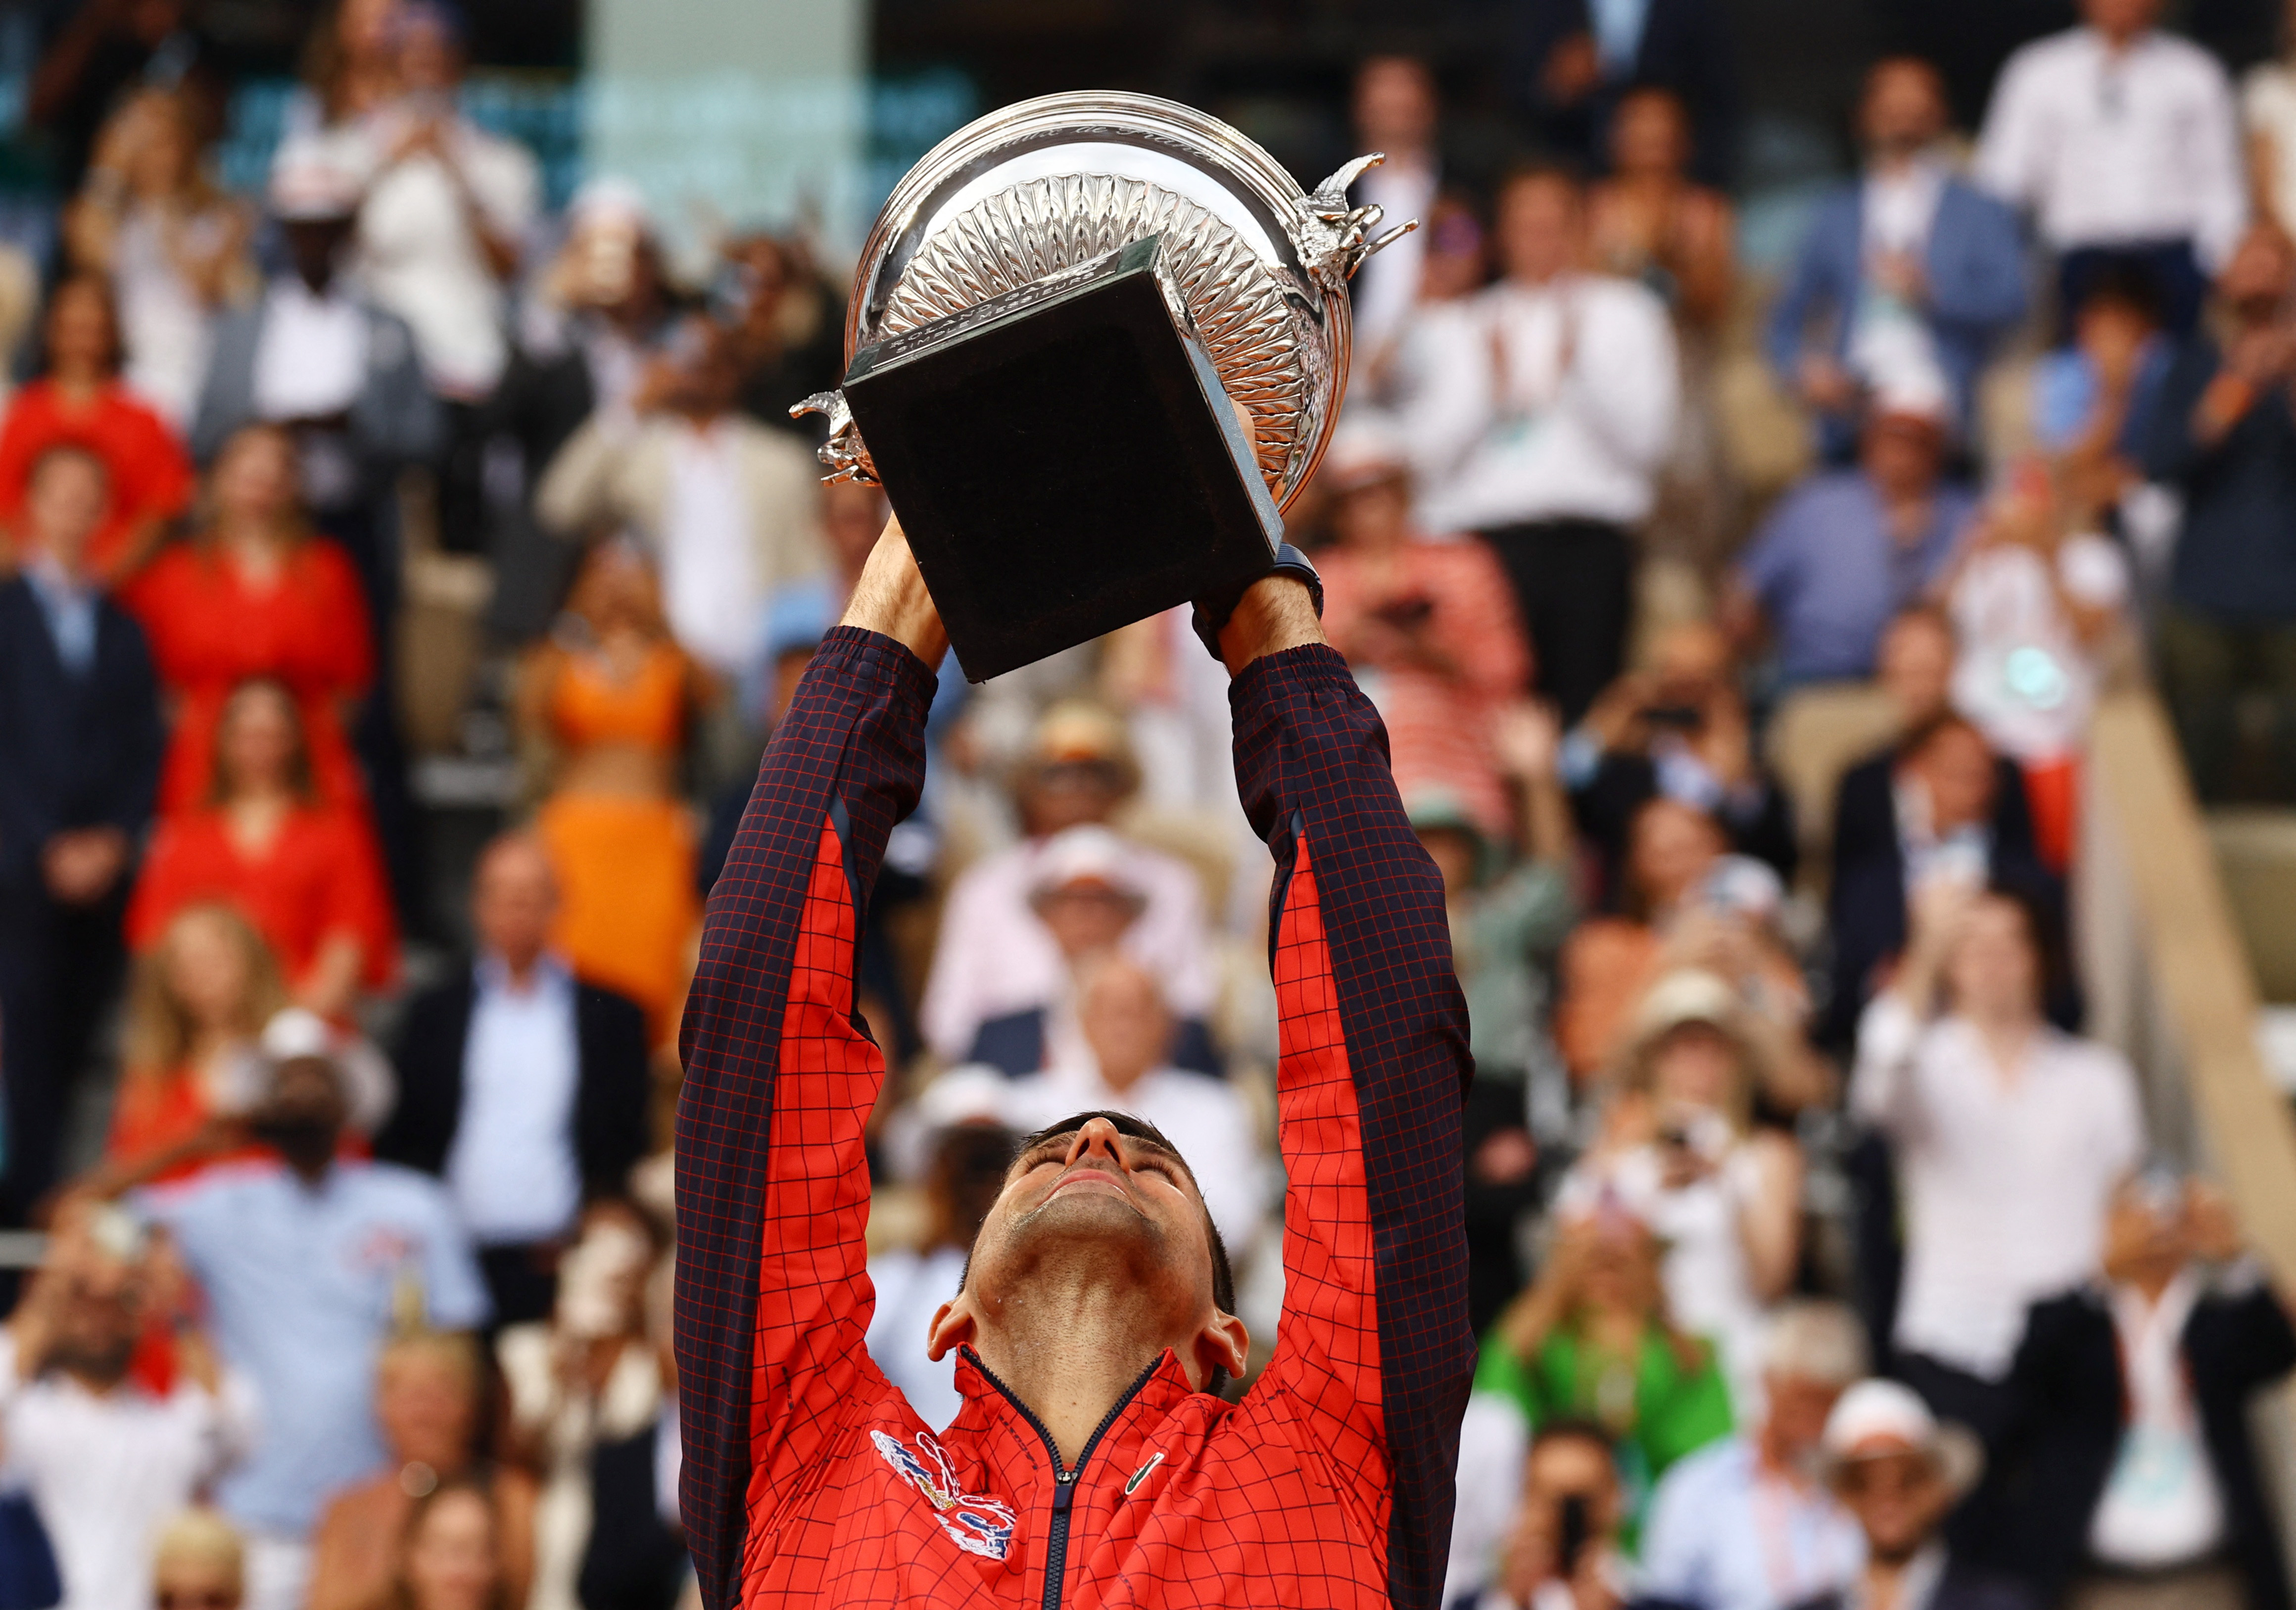 Novak Djokovic wins his 23rd Grand Slam title : NPR